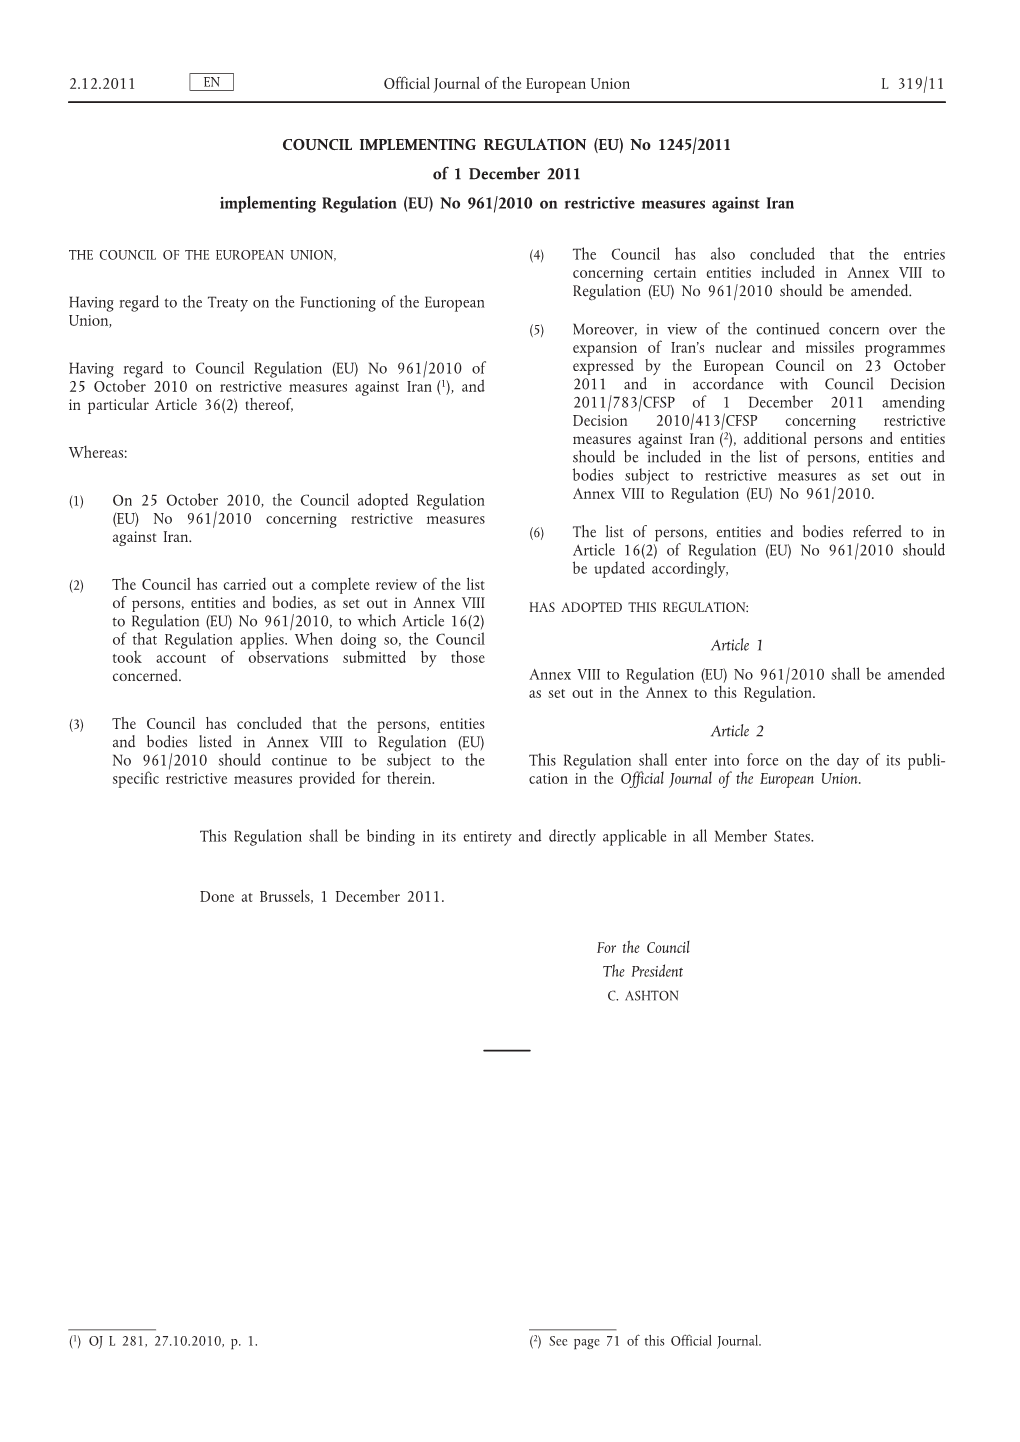 Council Implementing Regulation (EU) No 1245 1St December 2011